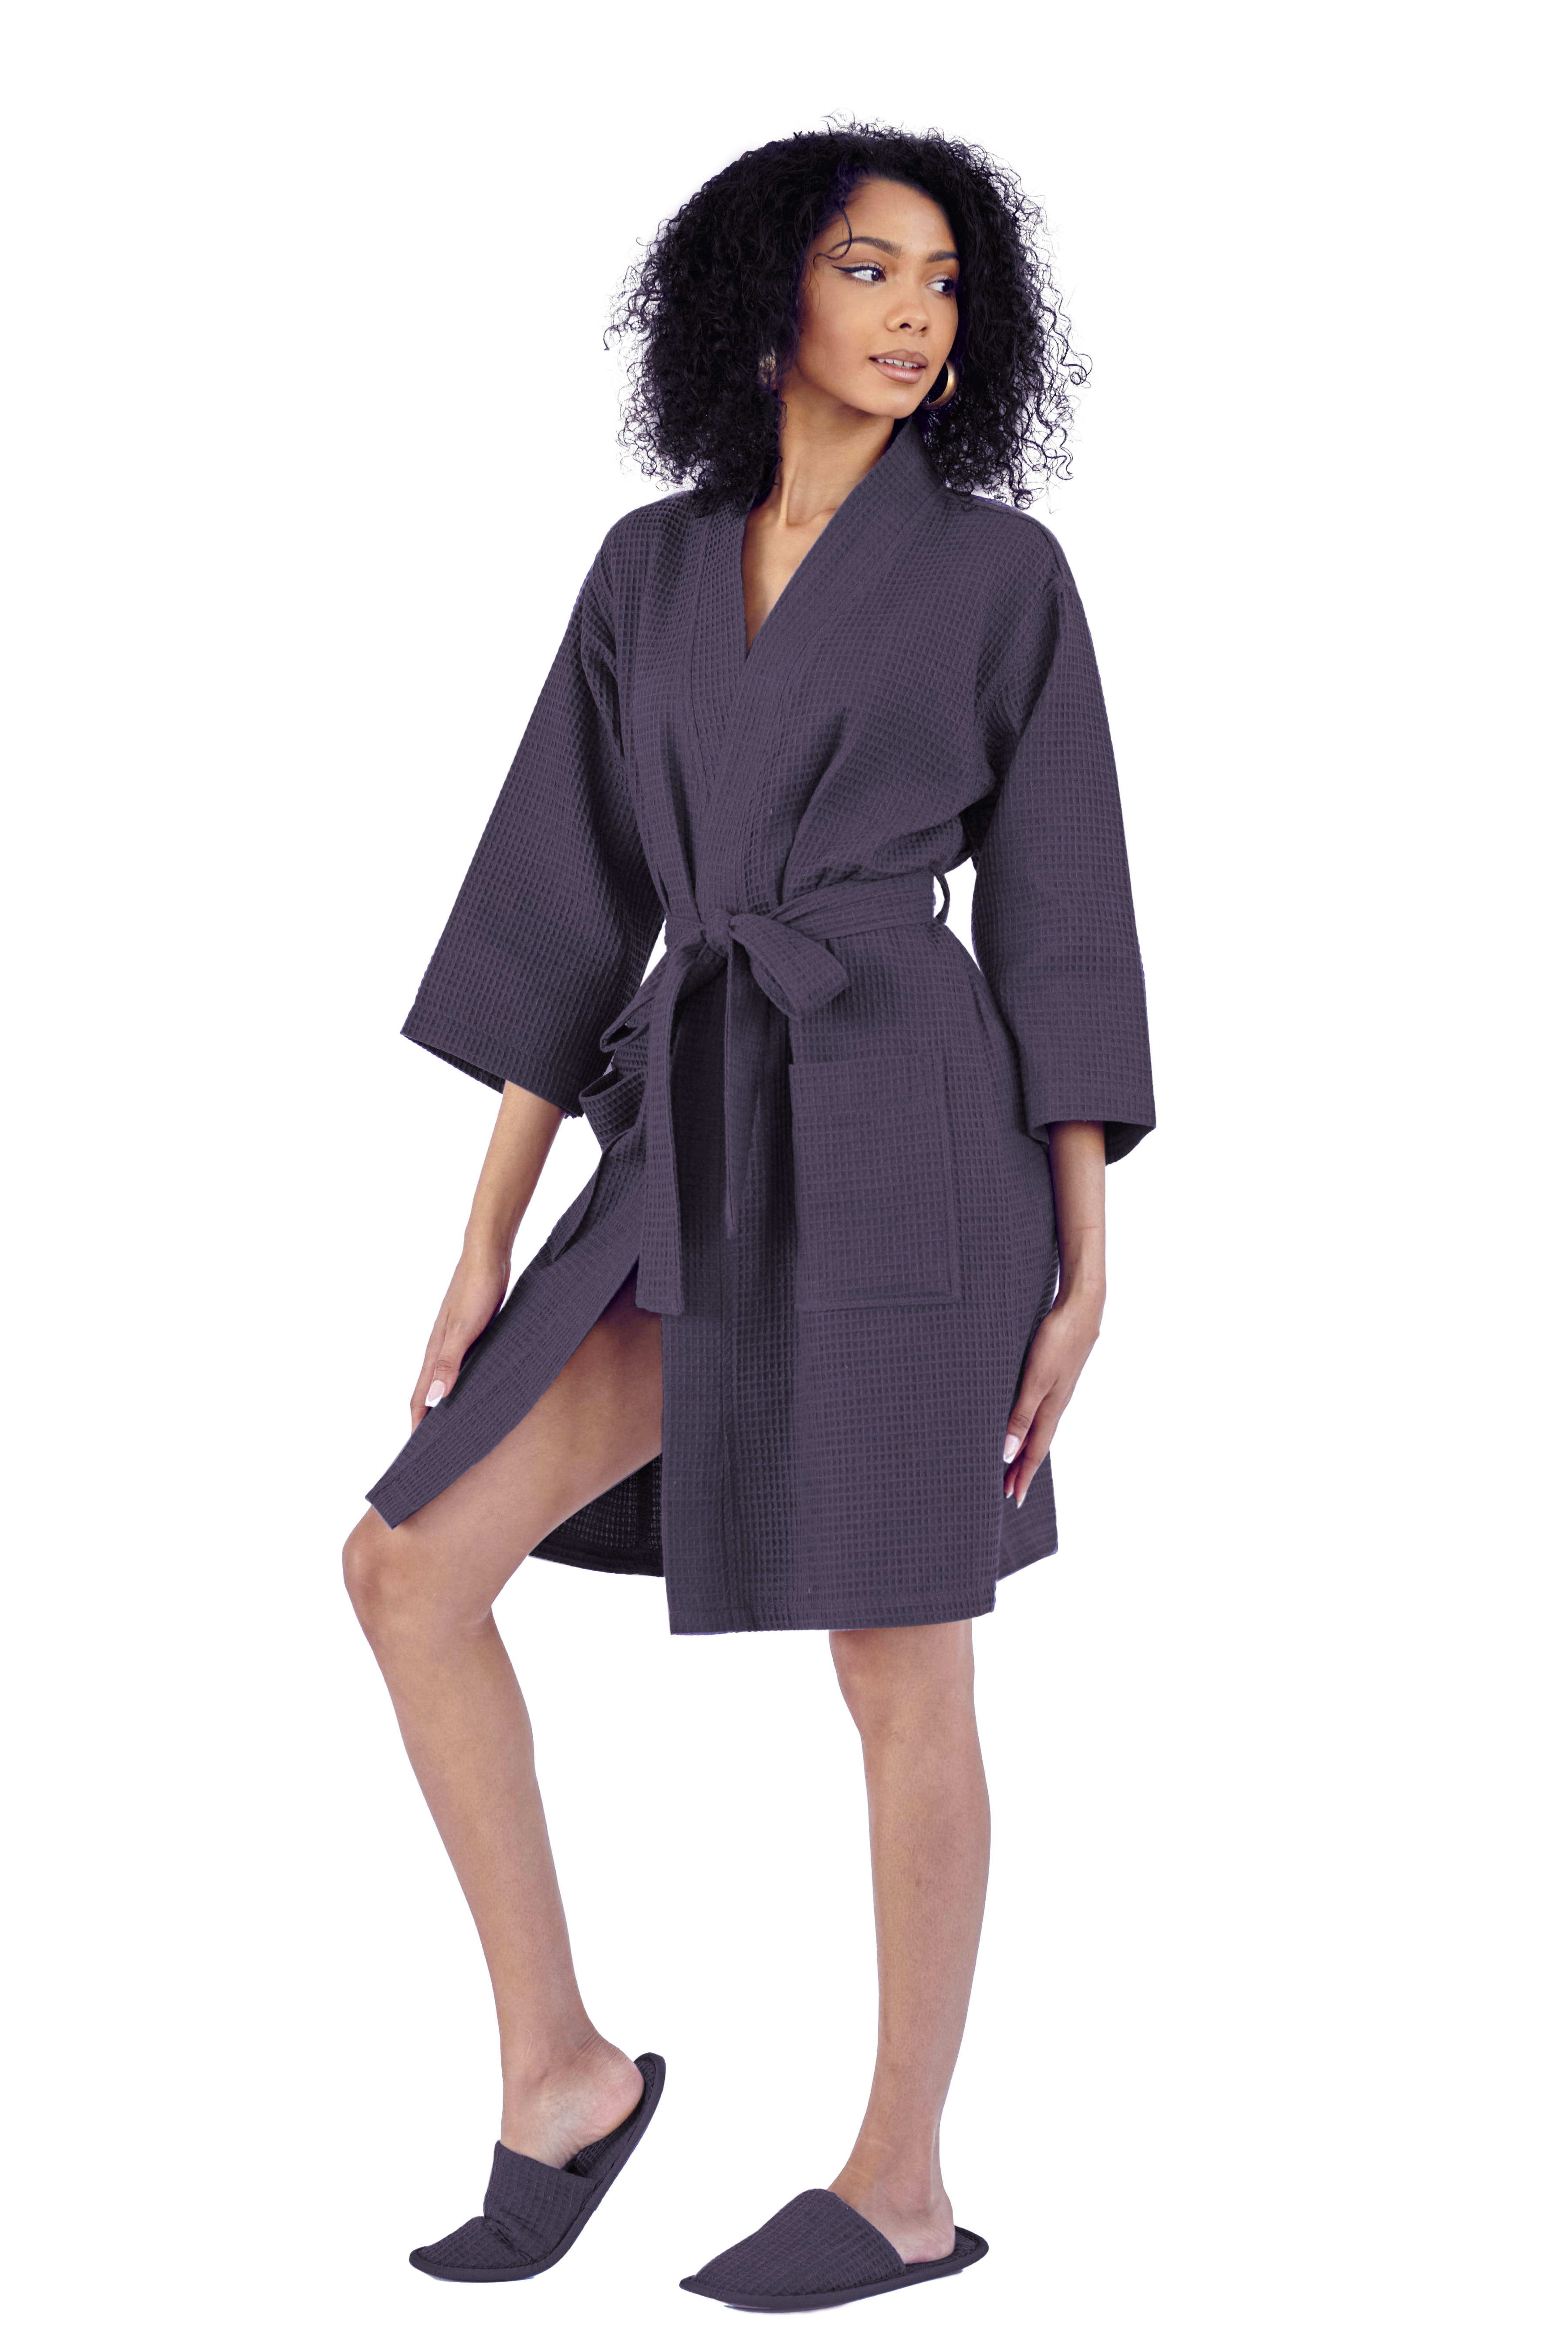 HOTOUCH Womens Robes Knee Length Lightweight Cotton Kimono Robe Soft Knit Bathrobe Summer House Robes 